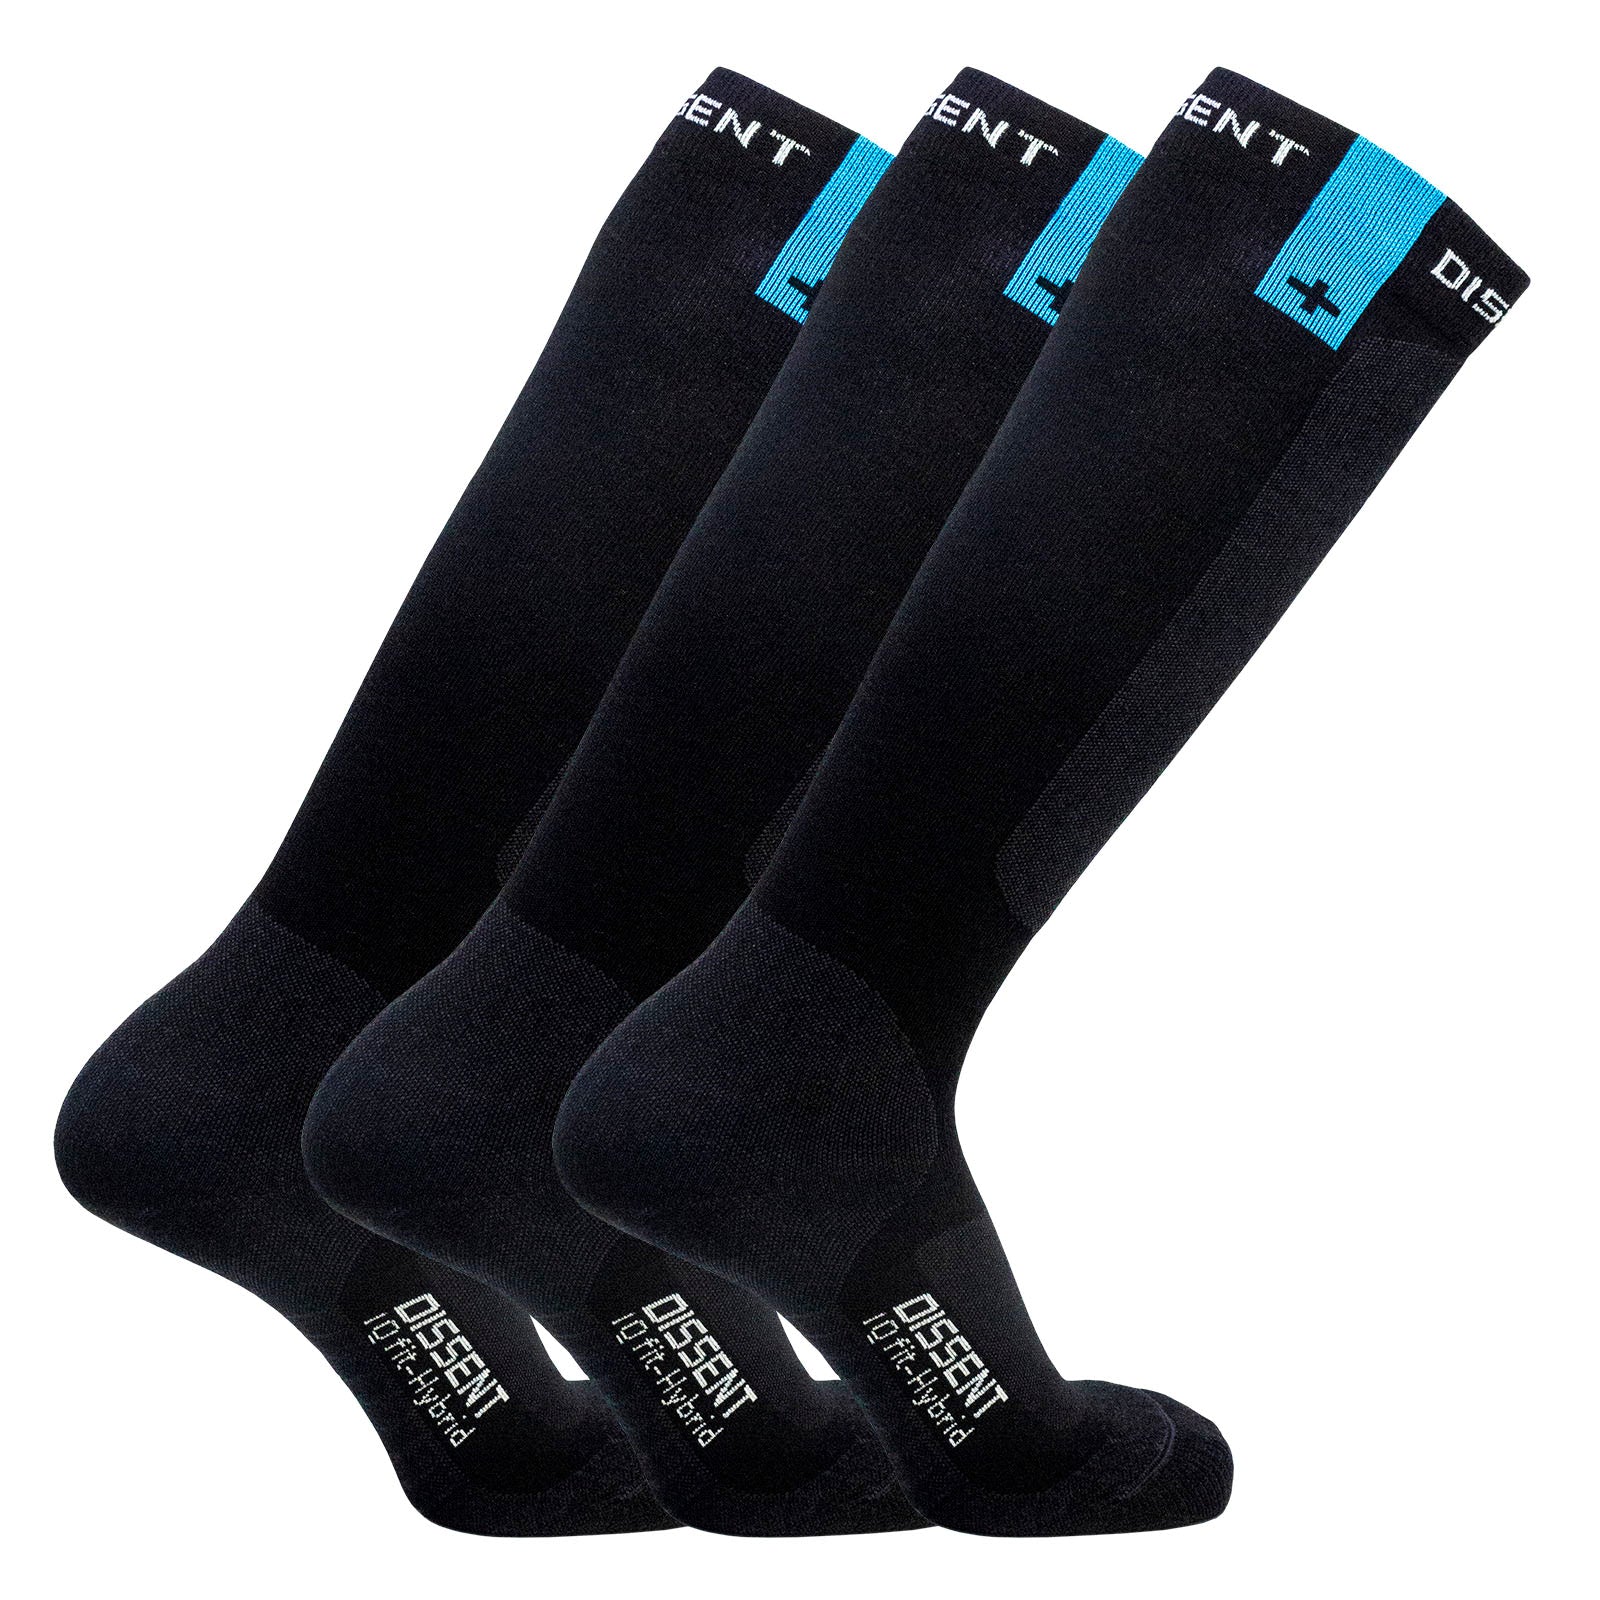 Dissent IQ Fit Hybrid Ski Sock - Targeted Padding + Optimized 